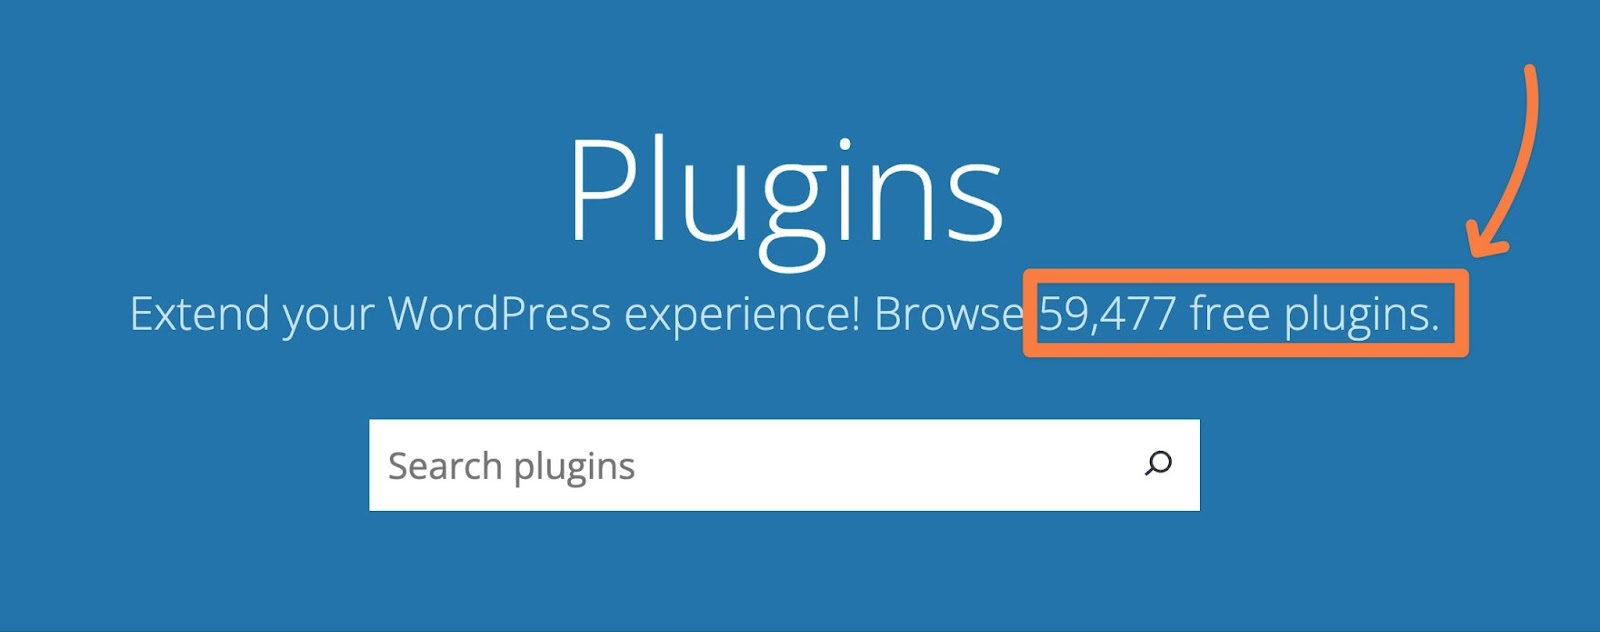 The WordPress.org plugin marketplace has almost 60,000 free plugins